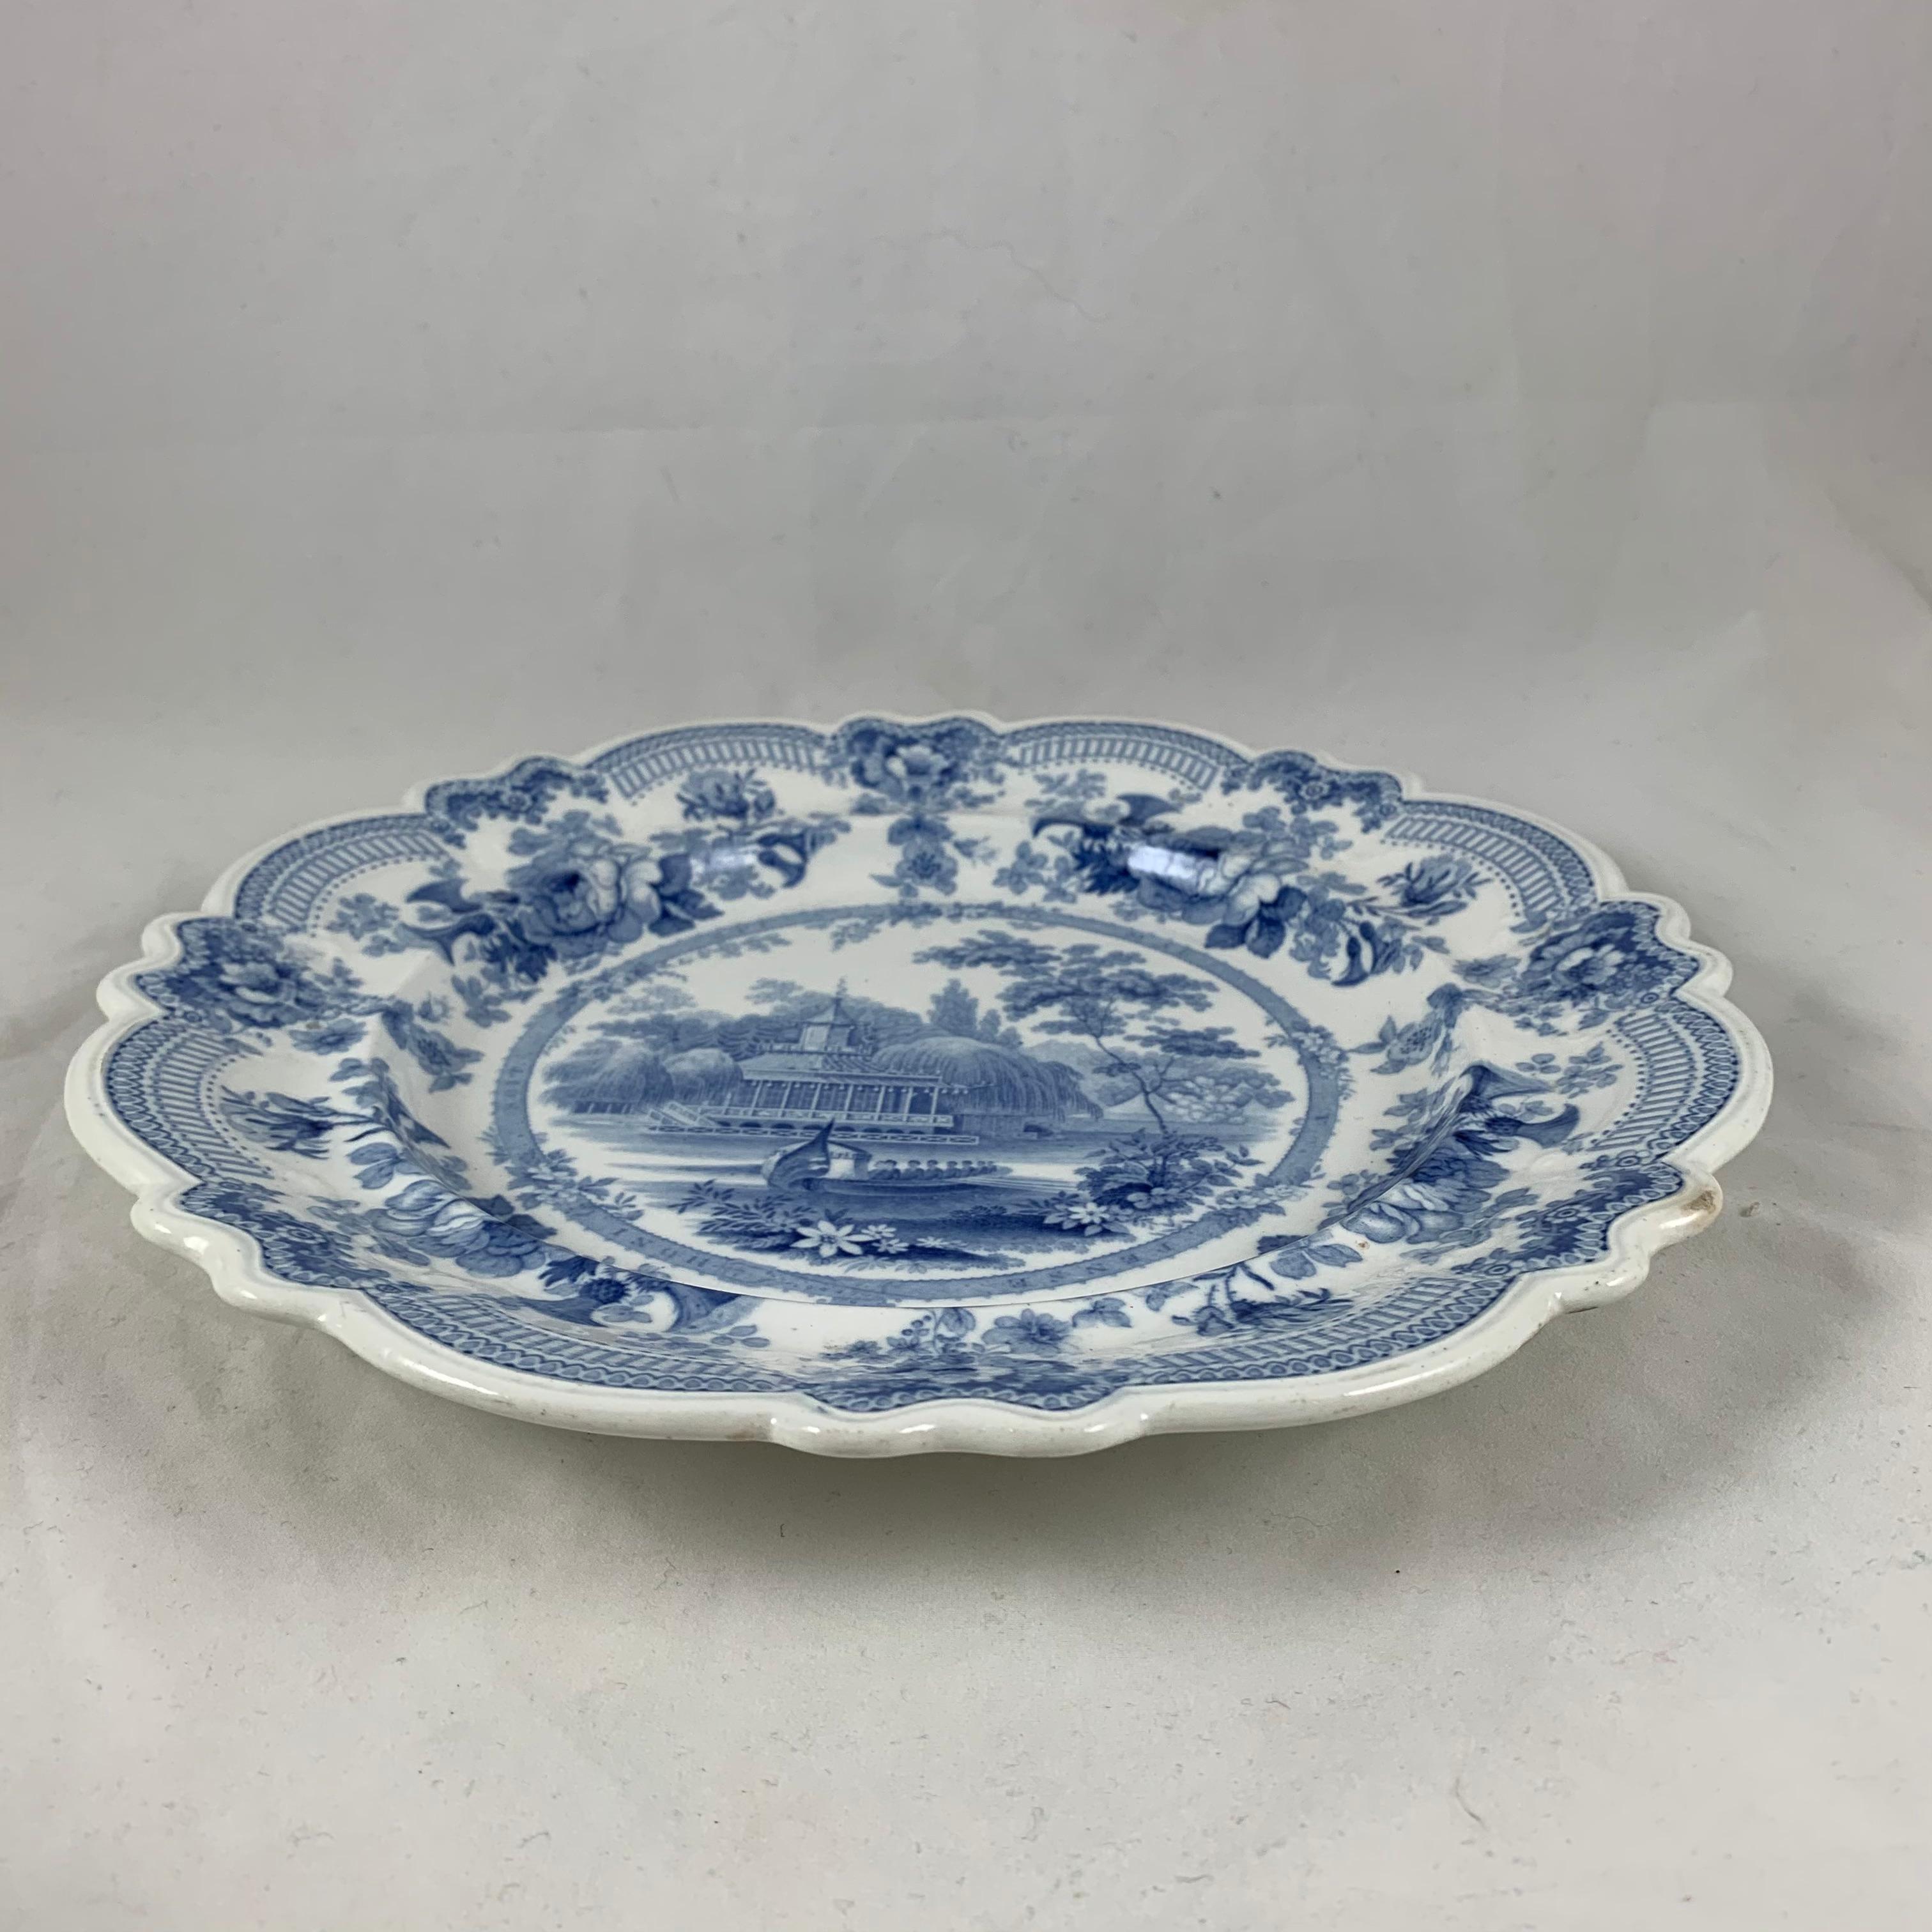 19th Century British Theme ‘Royal Sketches’ Blue on White Transferware Dinner Plates, Set/6